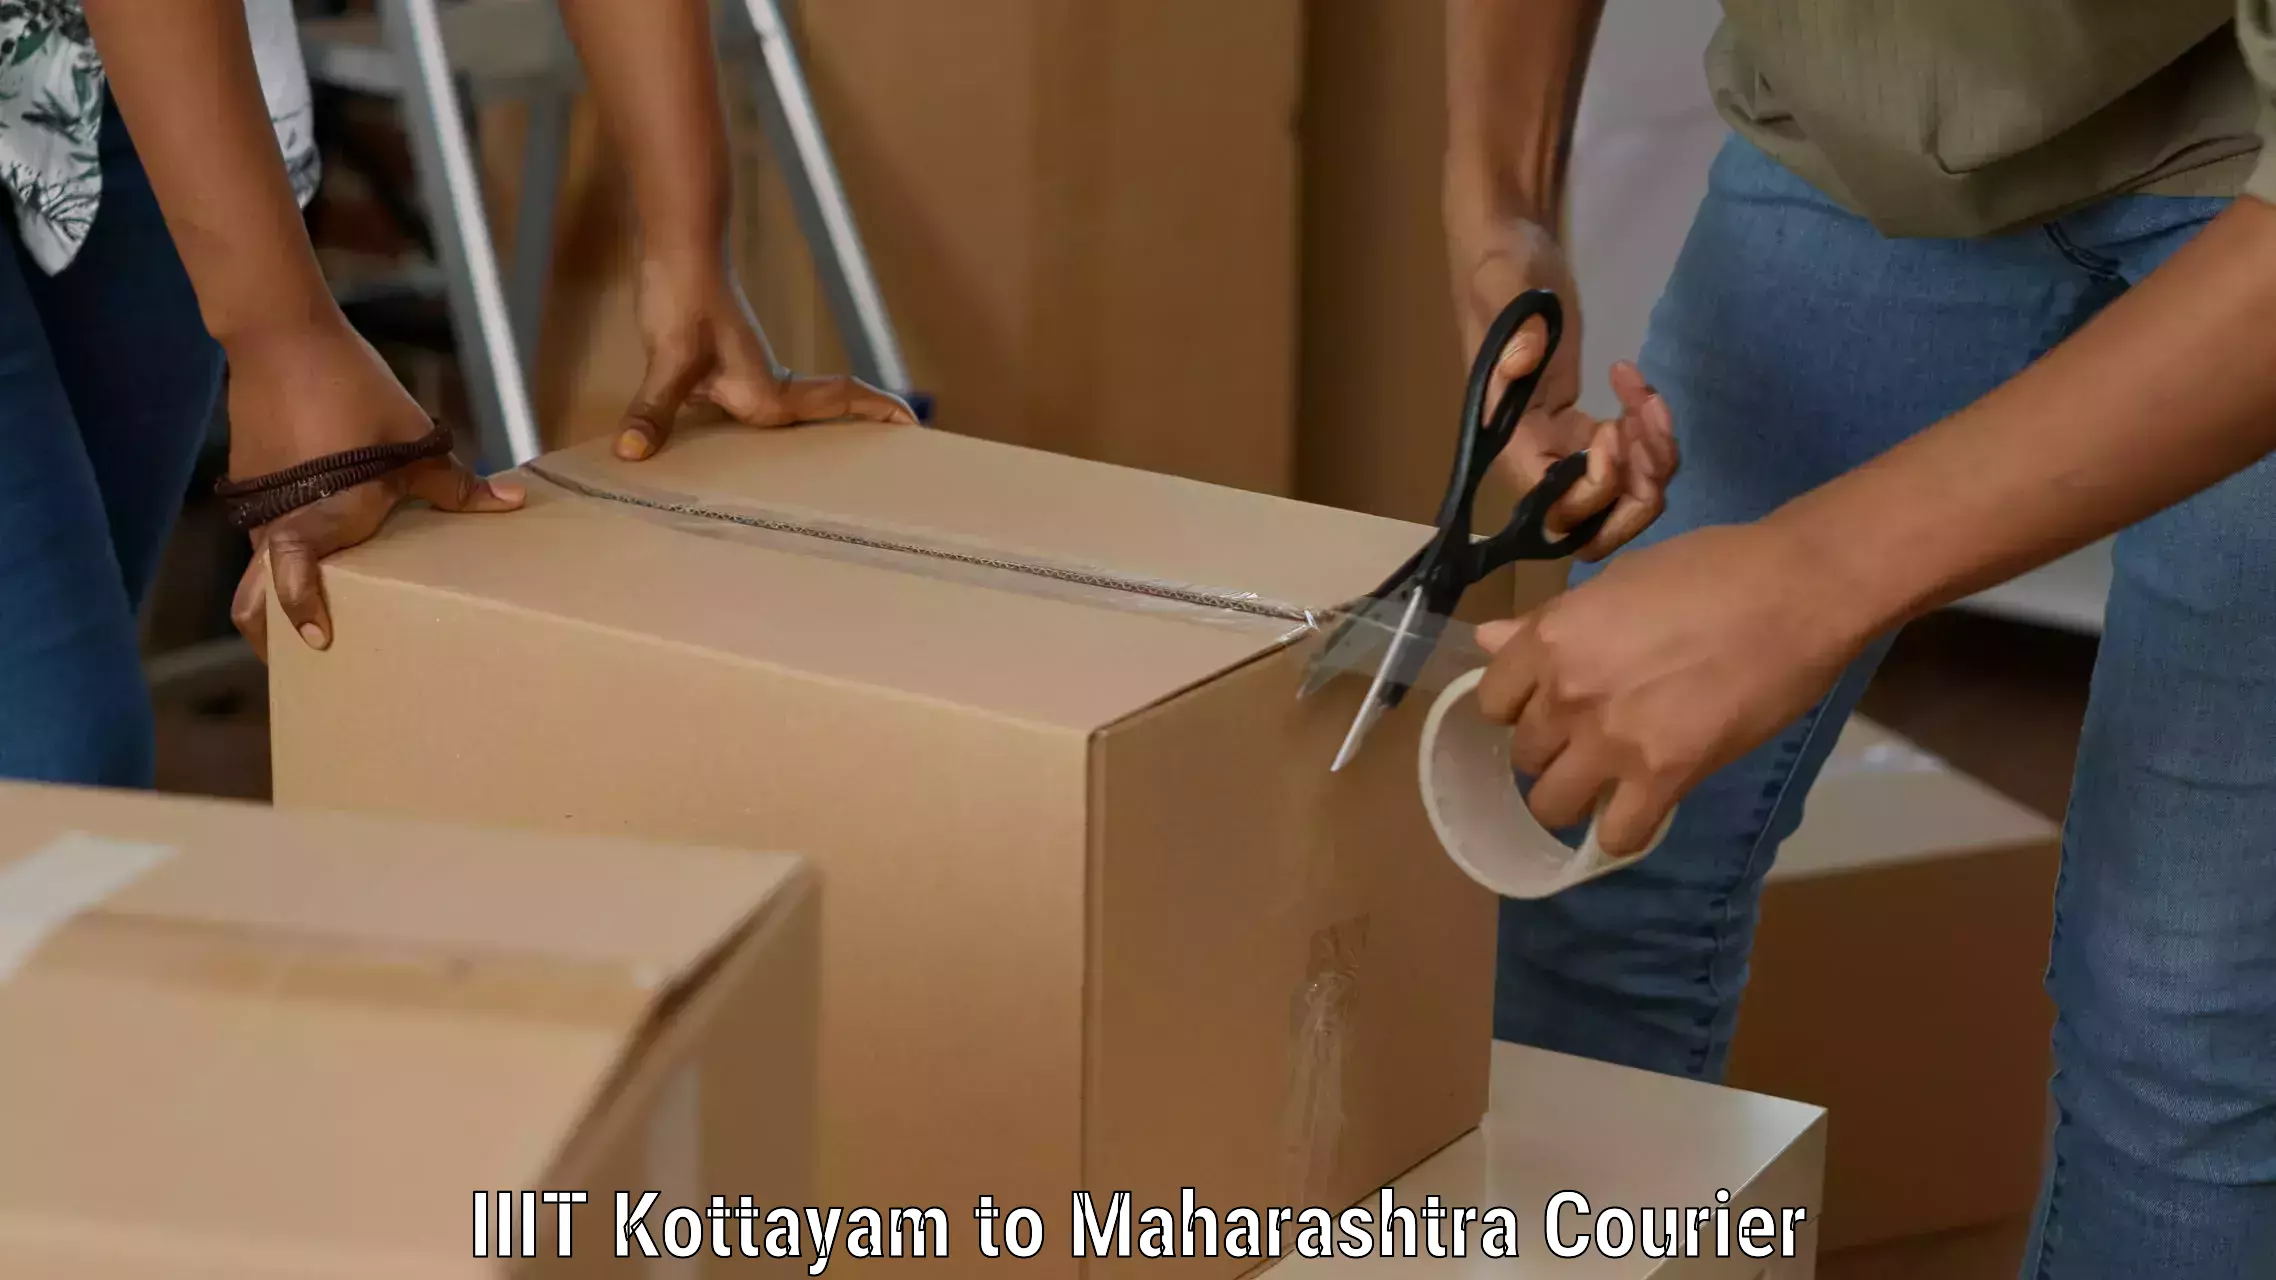 Urgent courier needs in IIIT Kottayam to DY Patil Vidyapeeth Mumbai